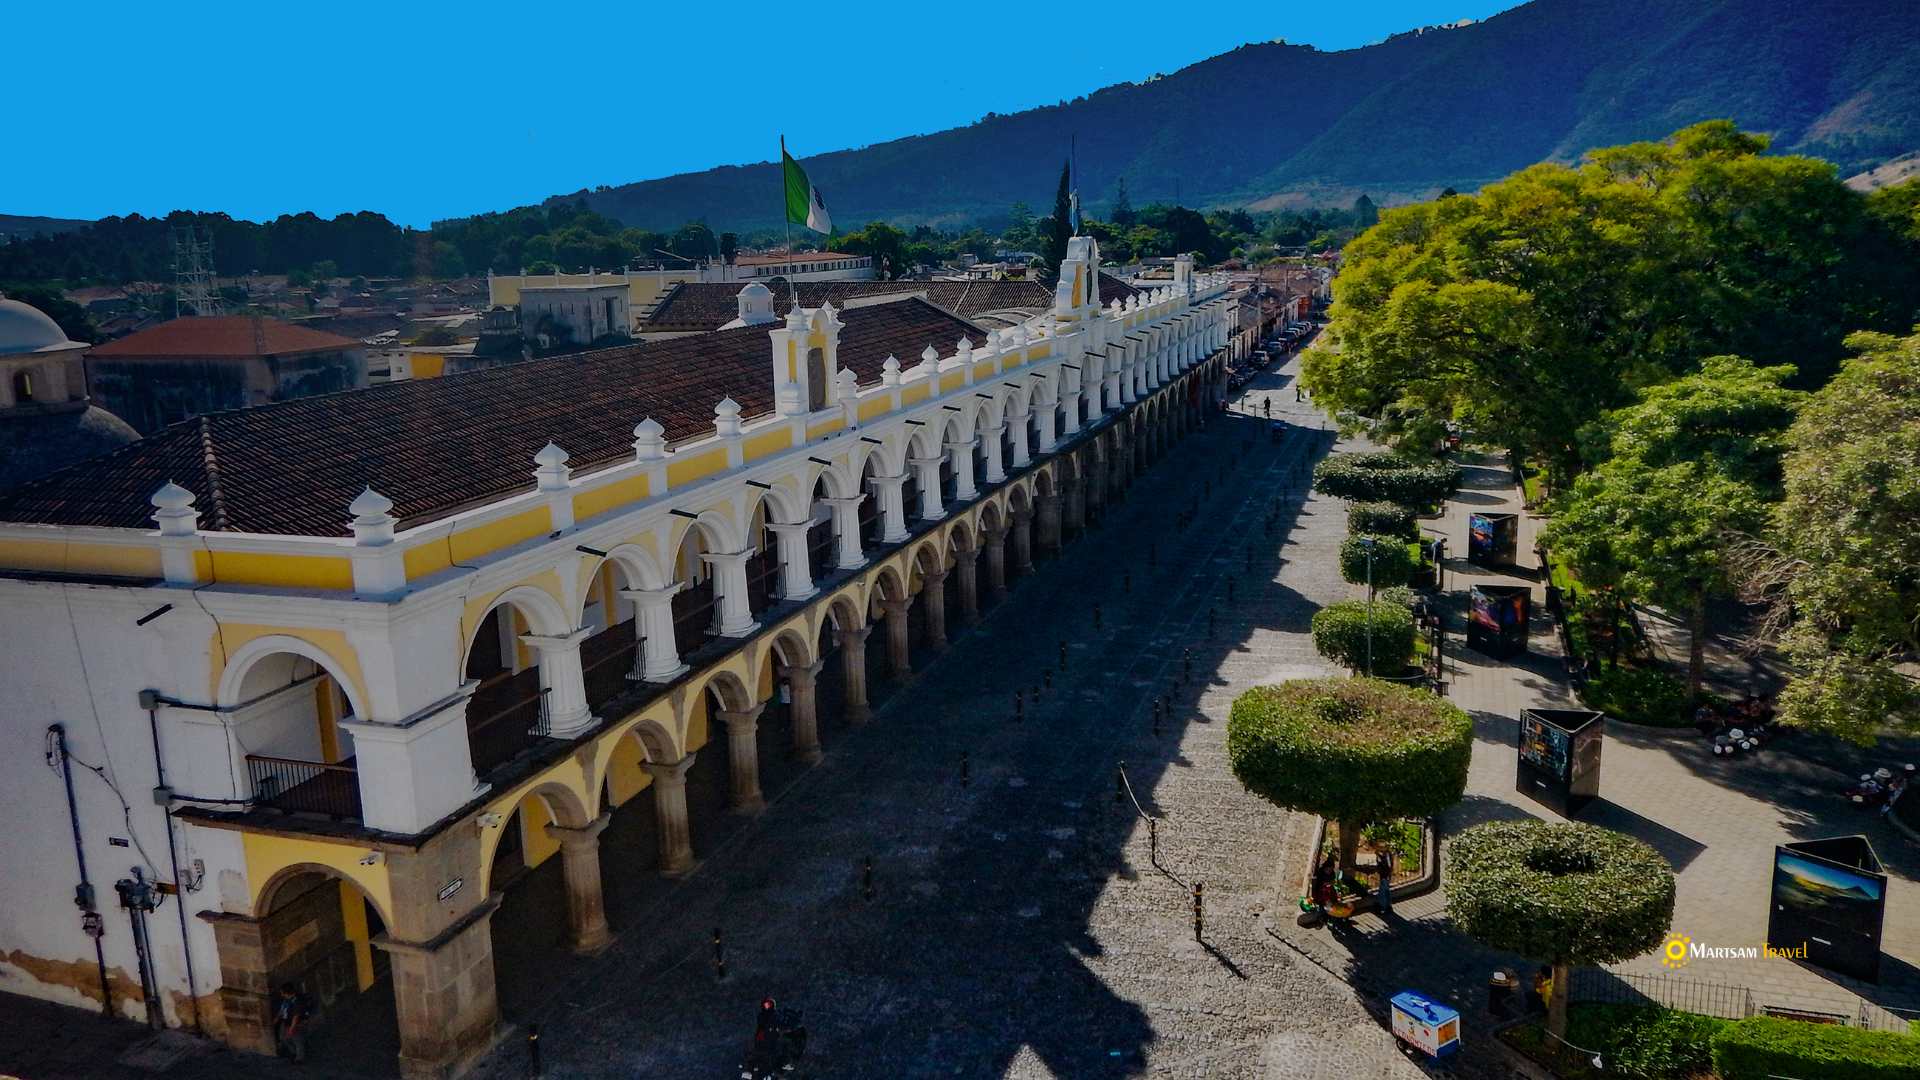 Antigua Guatemala's central plaza showcasing the historic Palacio de Los Capitanes, a symbol of colonial architecture and cultural heritage.